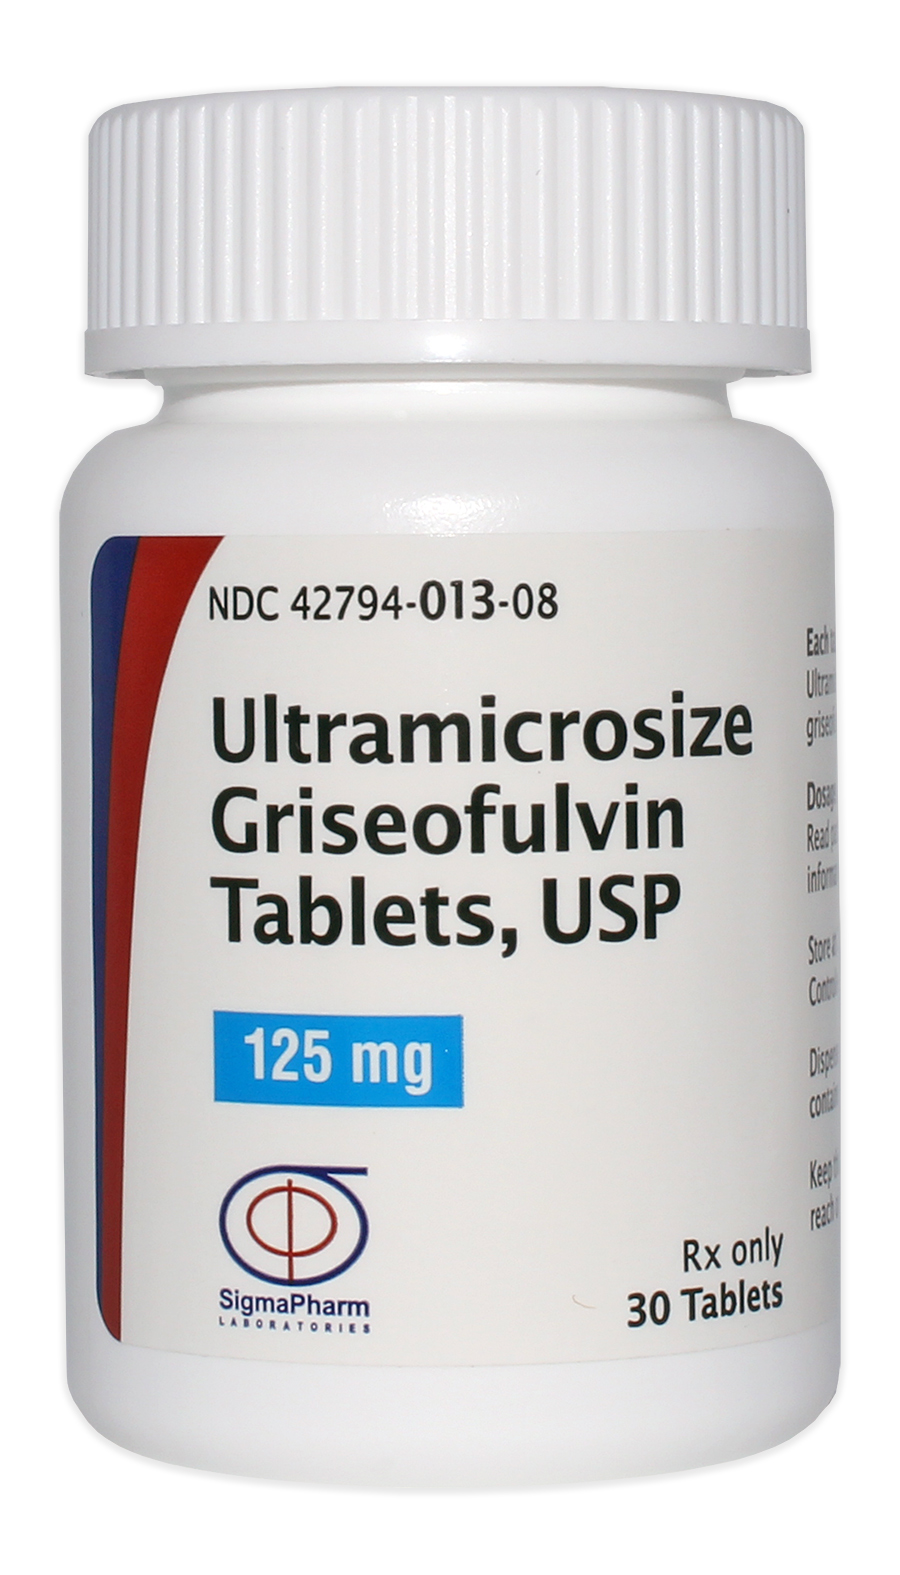 Ultramicrosize Griseofulvin Tablets, USP 125 mg